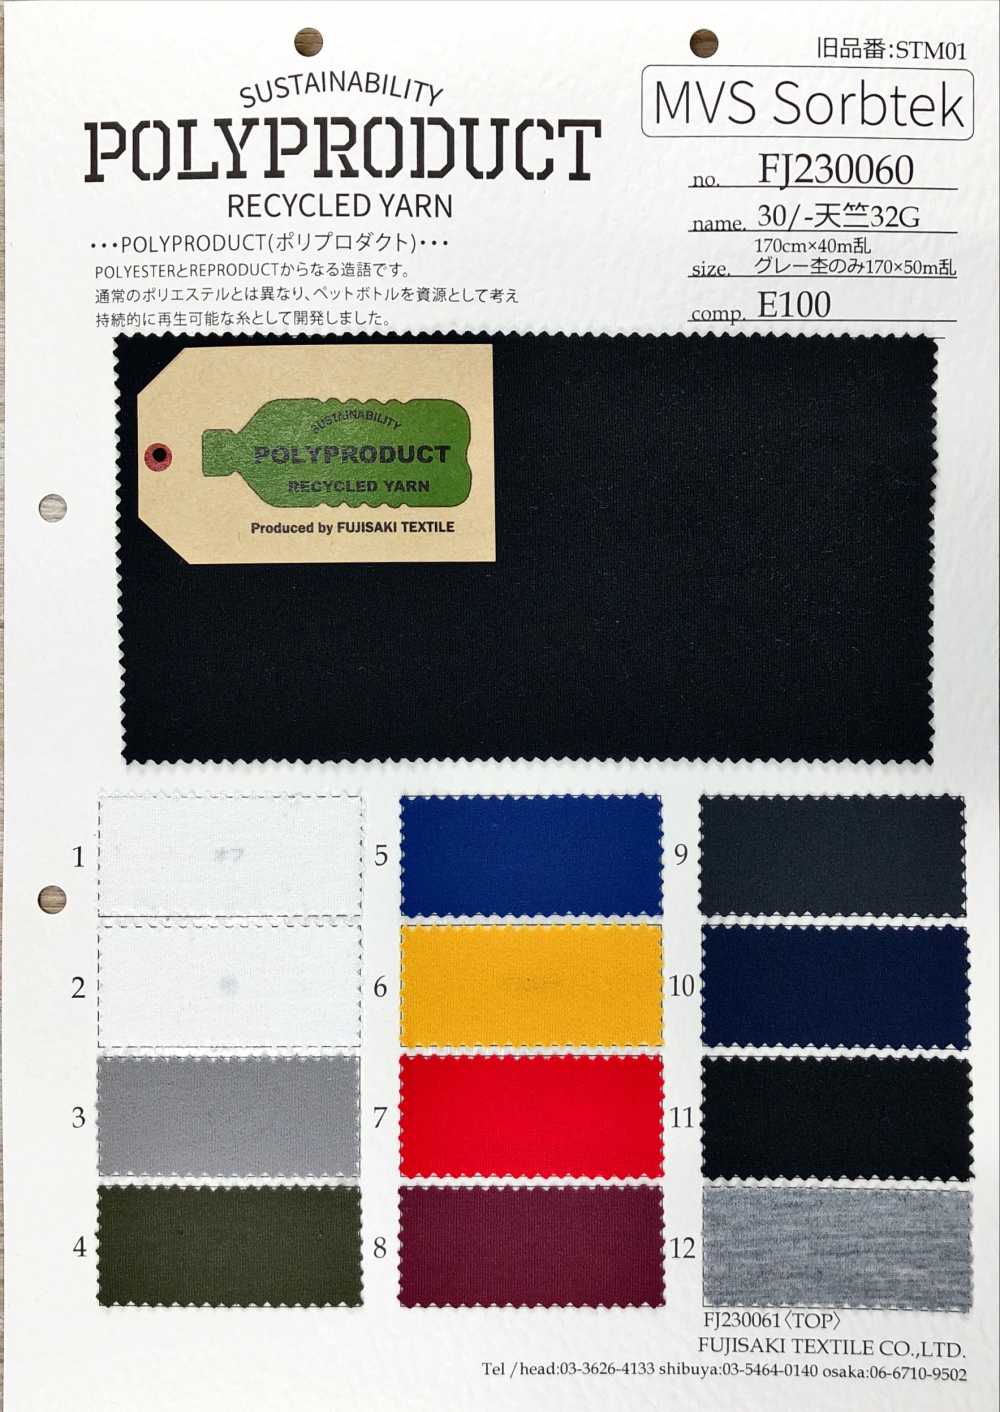 FJ230060 30/- Jersey De Tela[Fabrica Textil] Fujisaki Textile